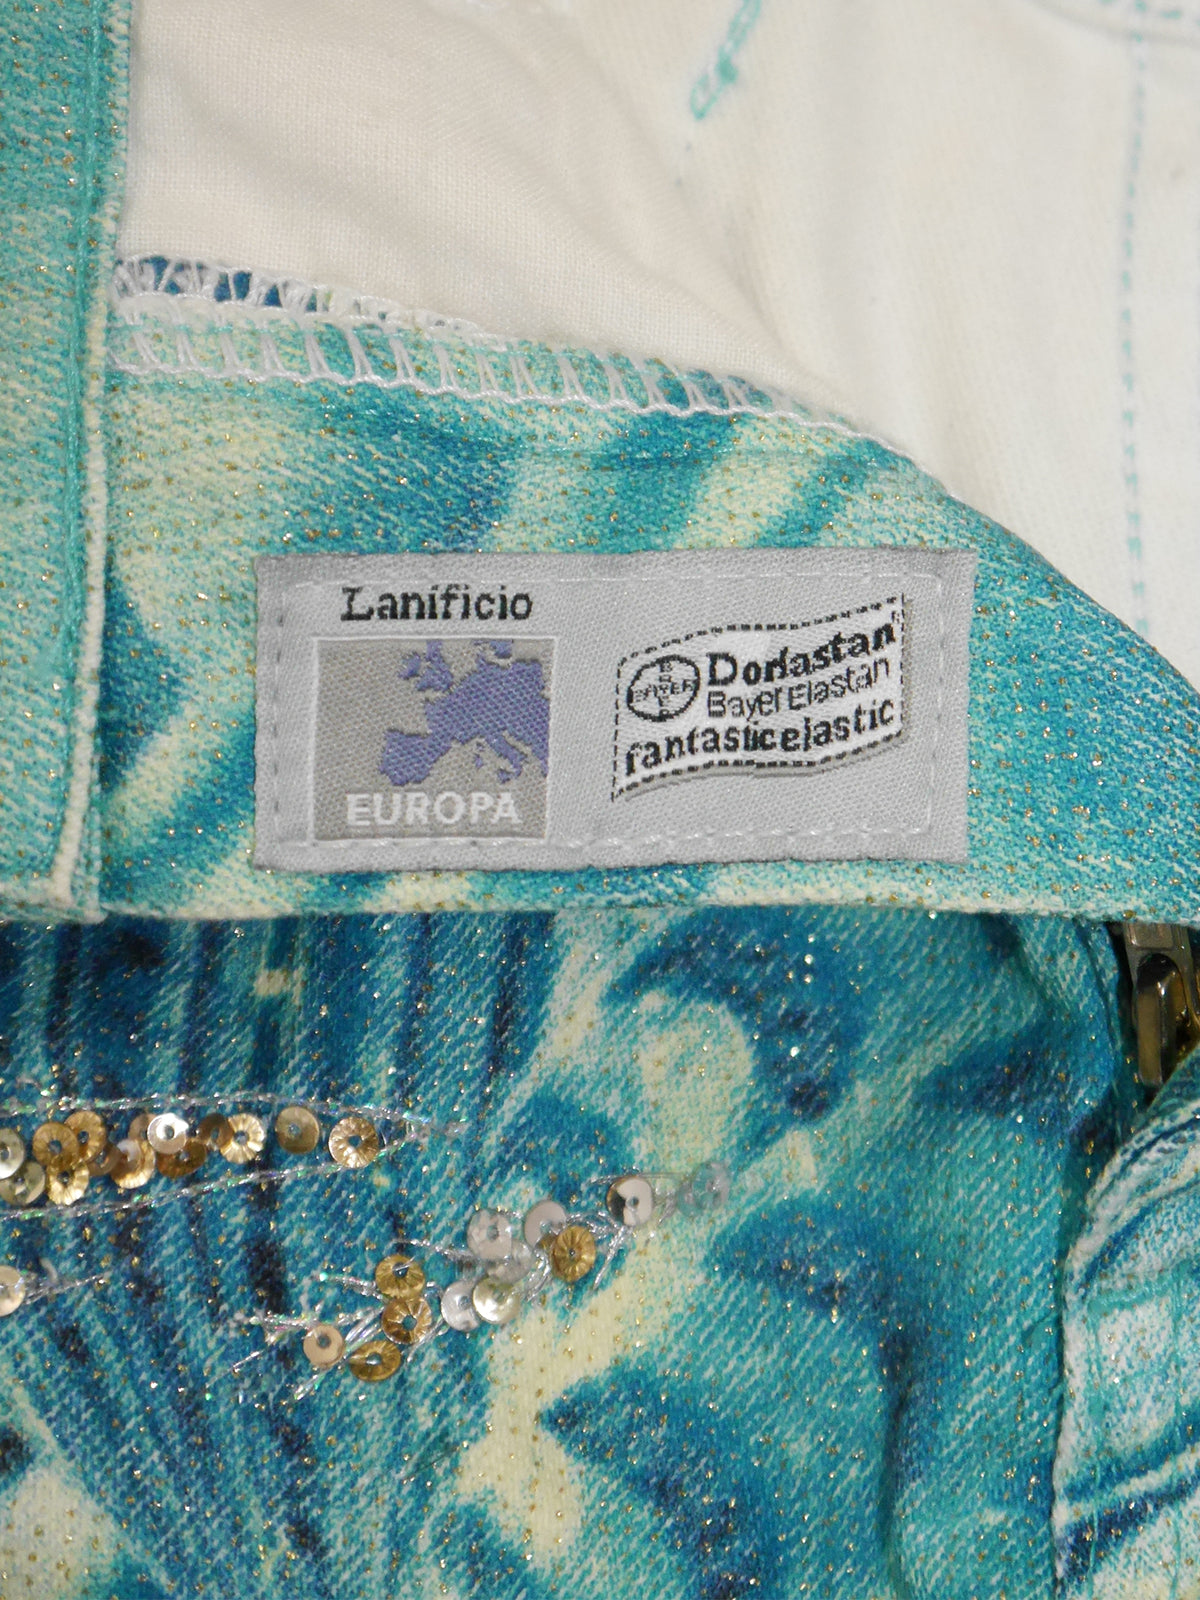 2003 – Roberto Cavalli, Spring/Summer RTW embroidered denim ensemble |  Fashion History Timeline